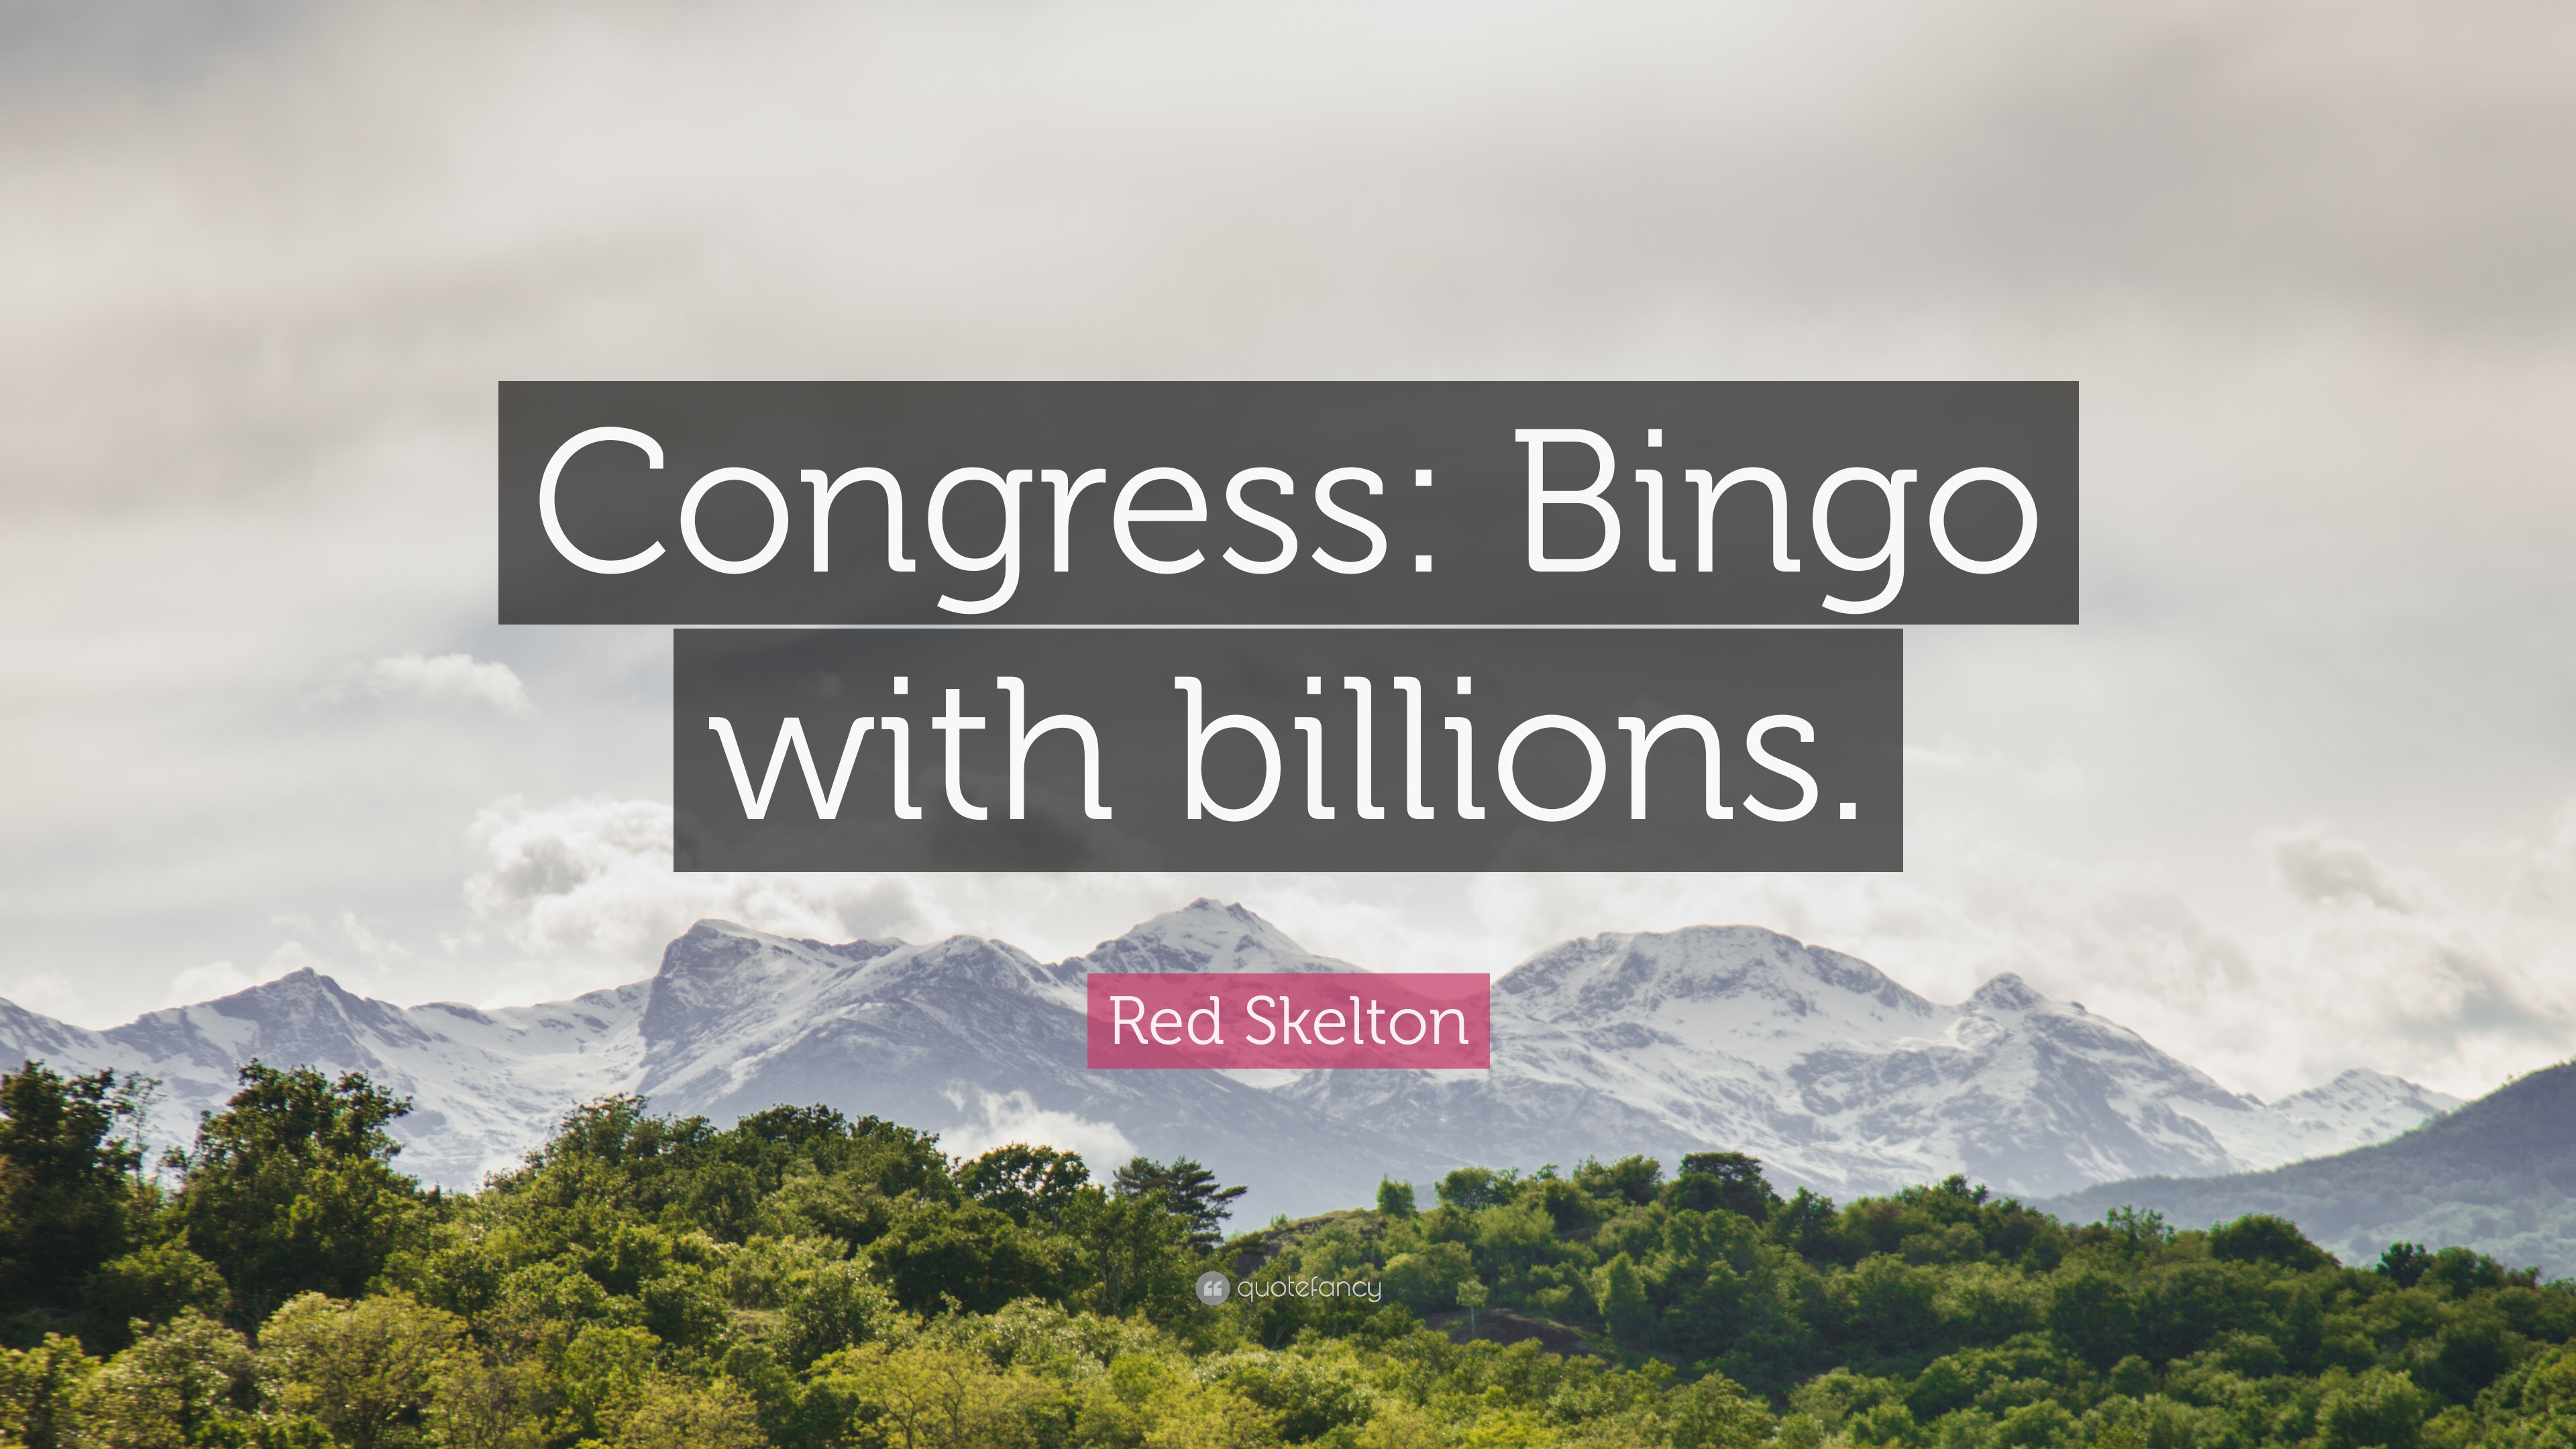 Red Skelton Quote: “Congress: Bingo with billions.” 7 wallpaper